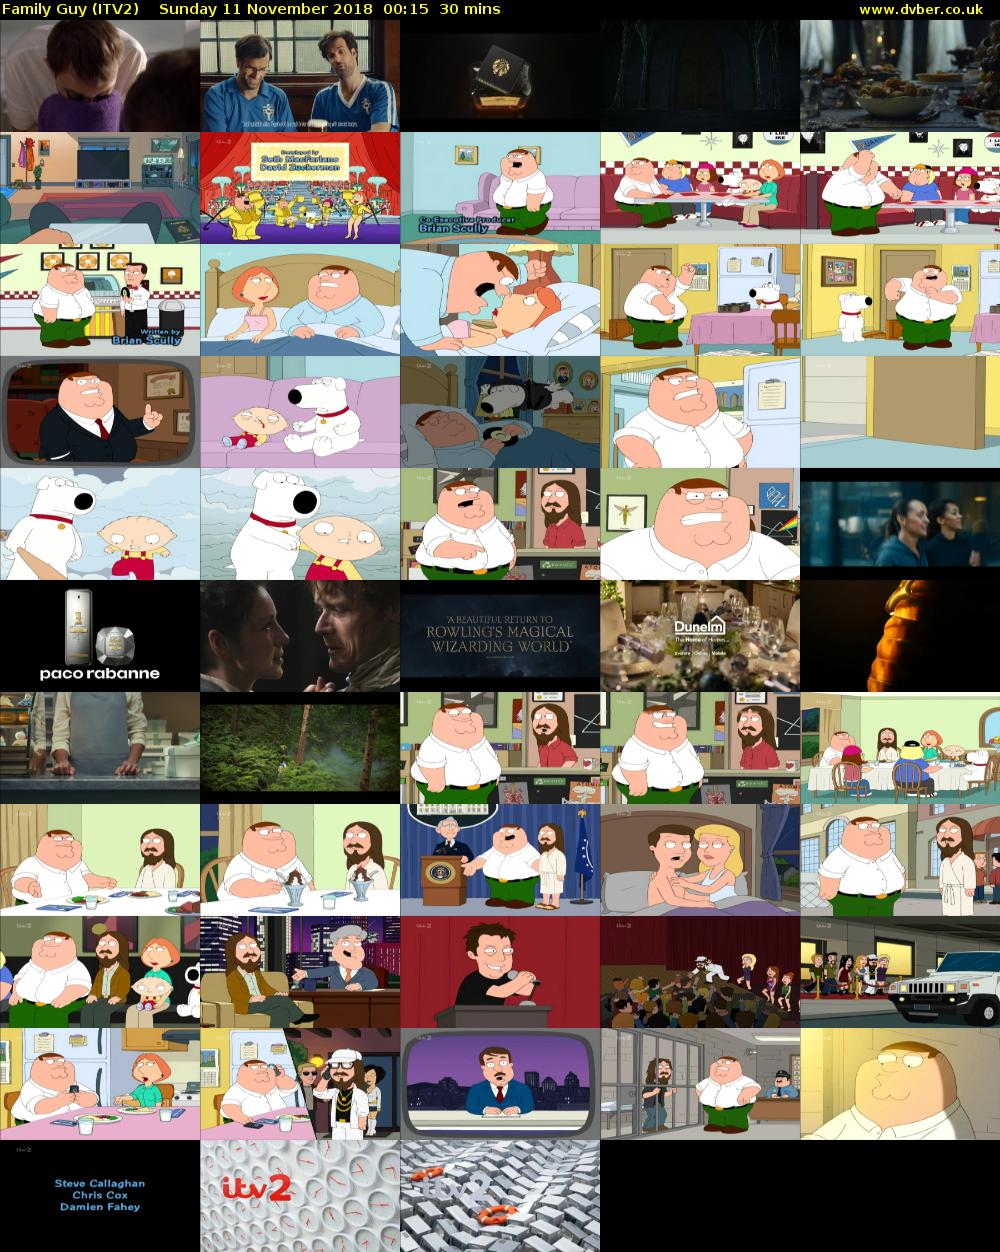 Family Guy (ITV2) Sunday 11 November 2018 00:15 - 00:45